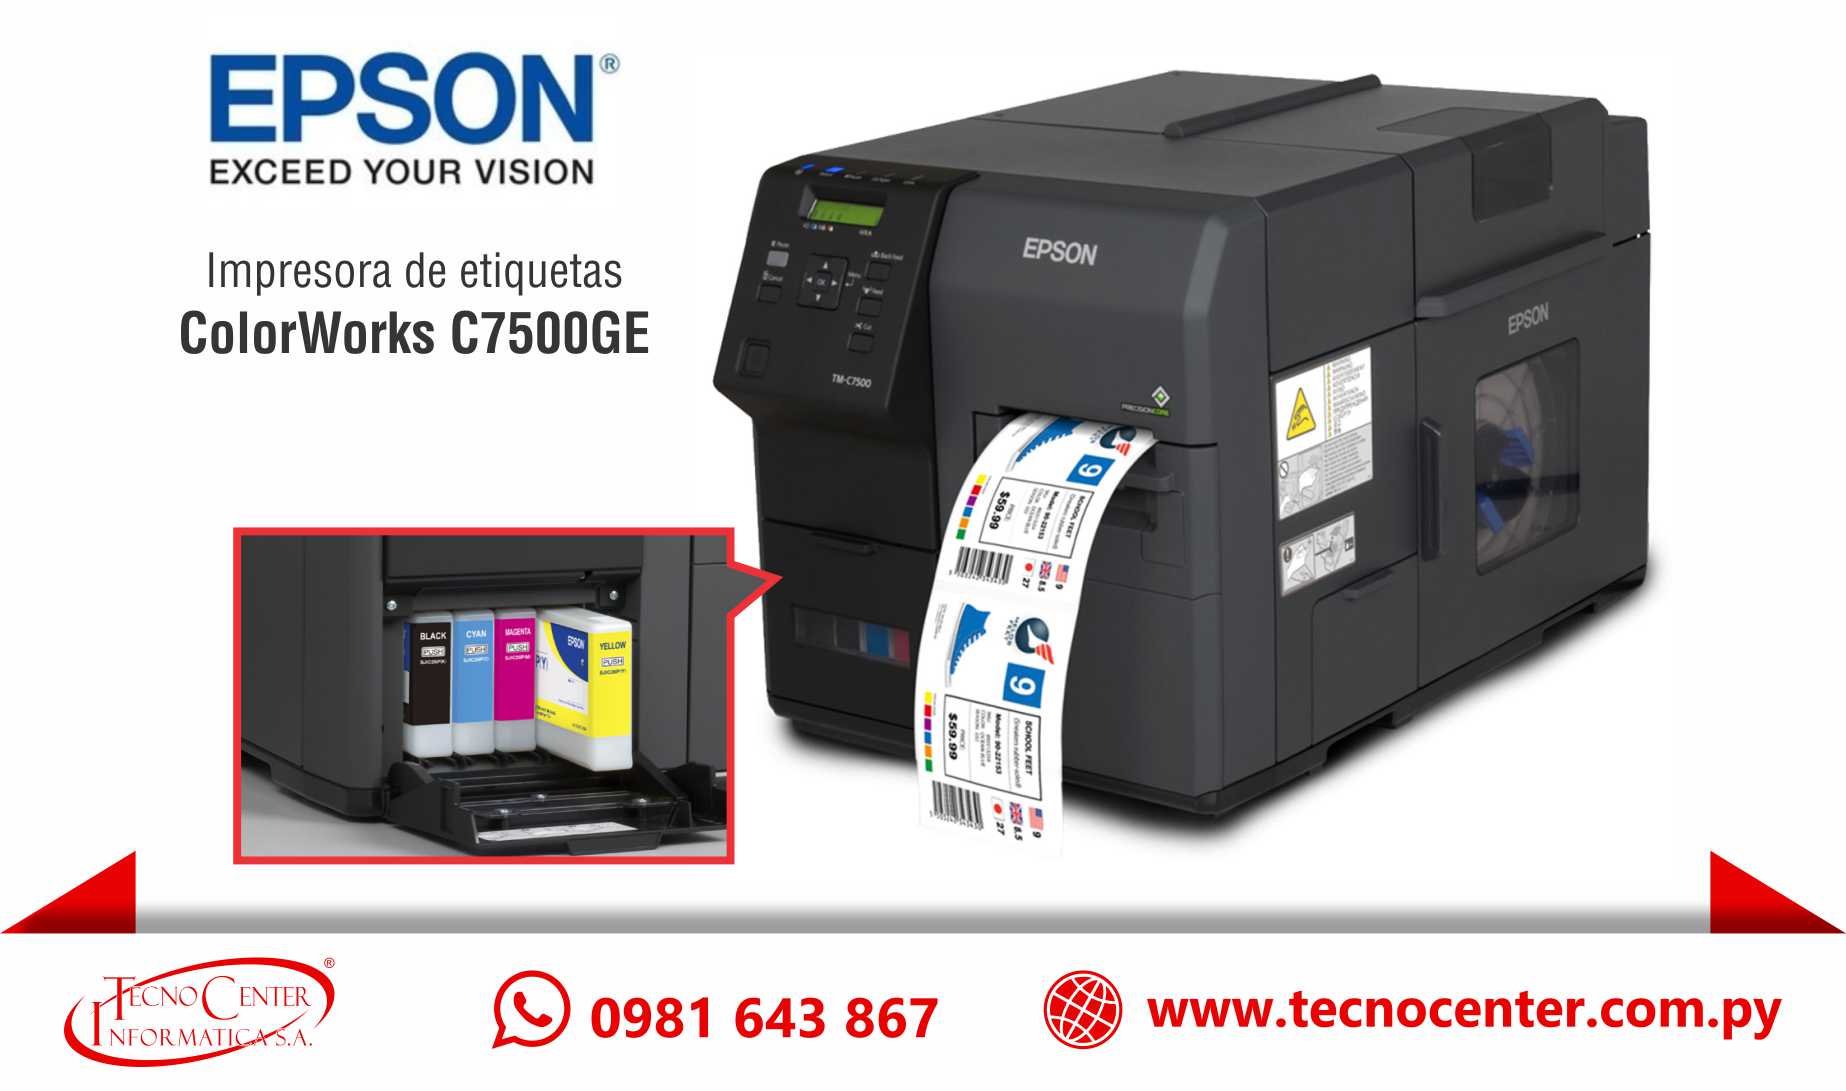 Impresora de etiquetas Epson ColorWorks C7500GE